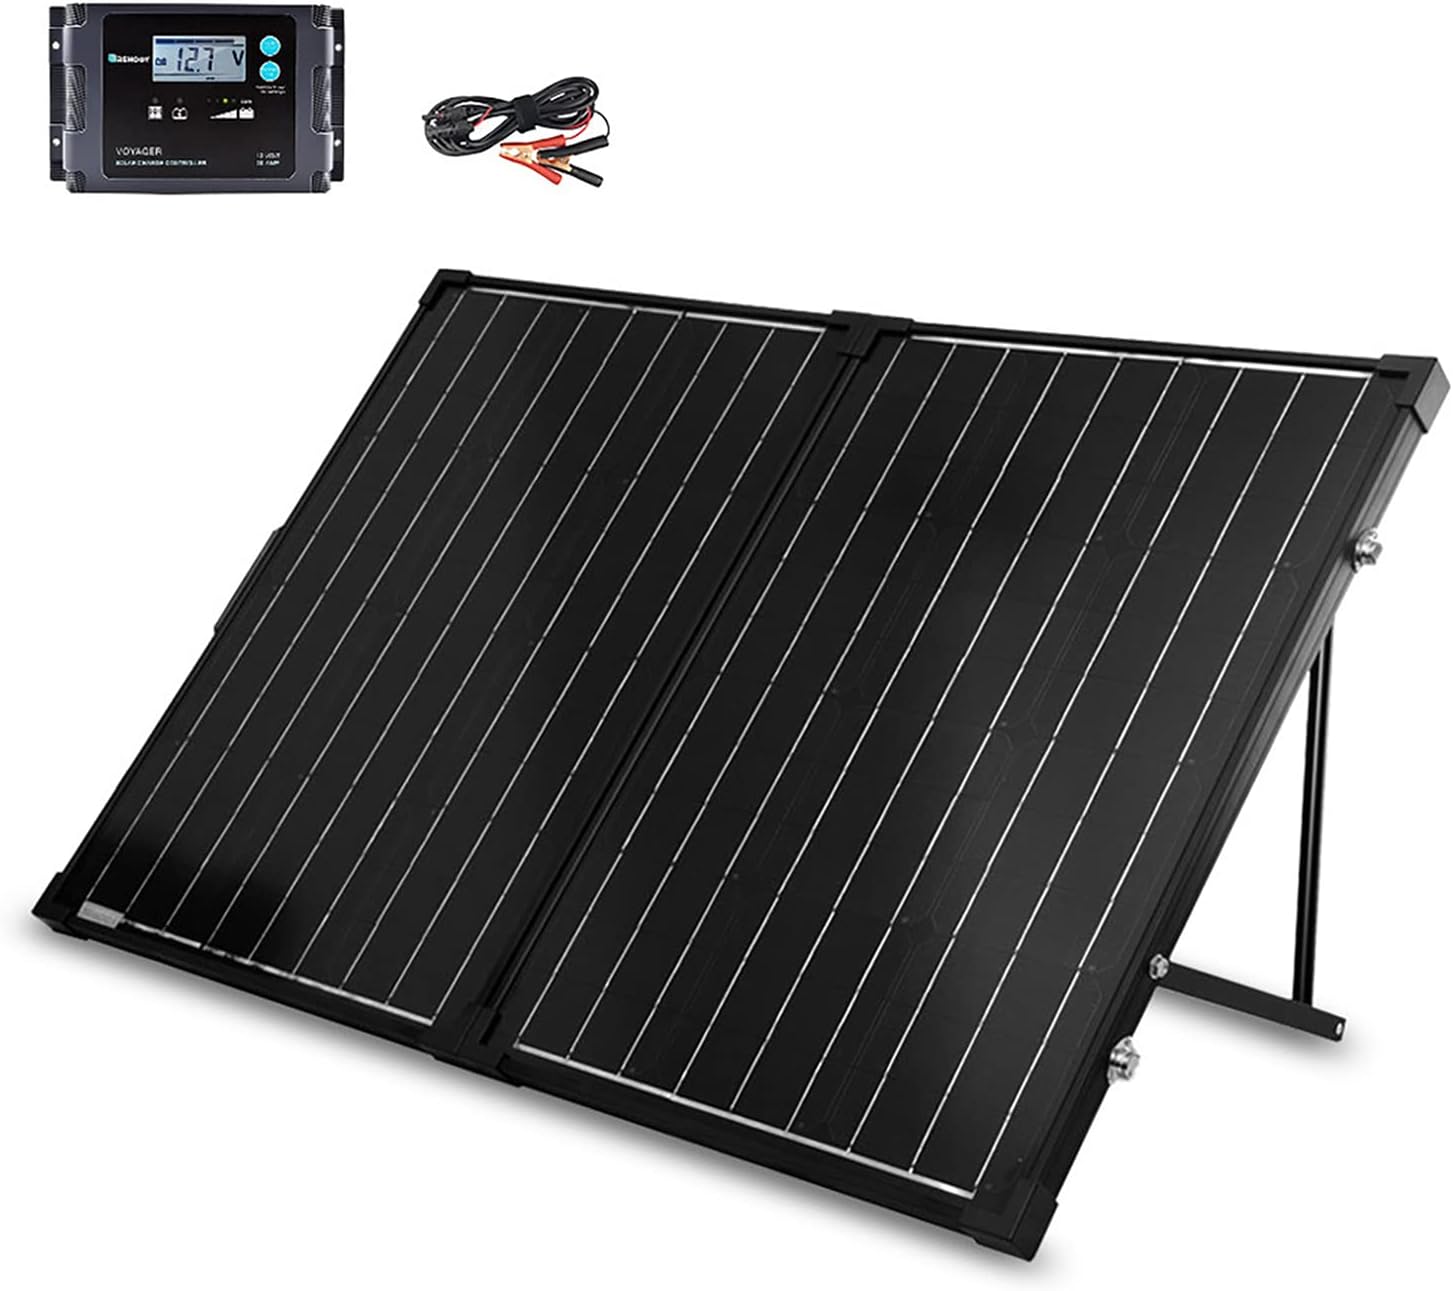 Renogy 200W Solar Panel Review